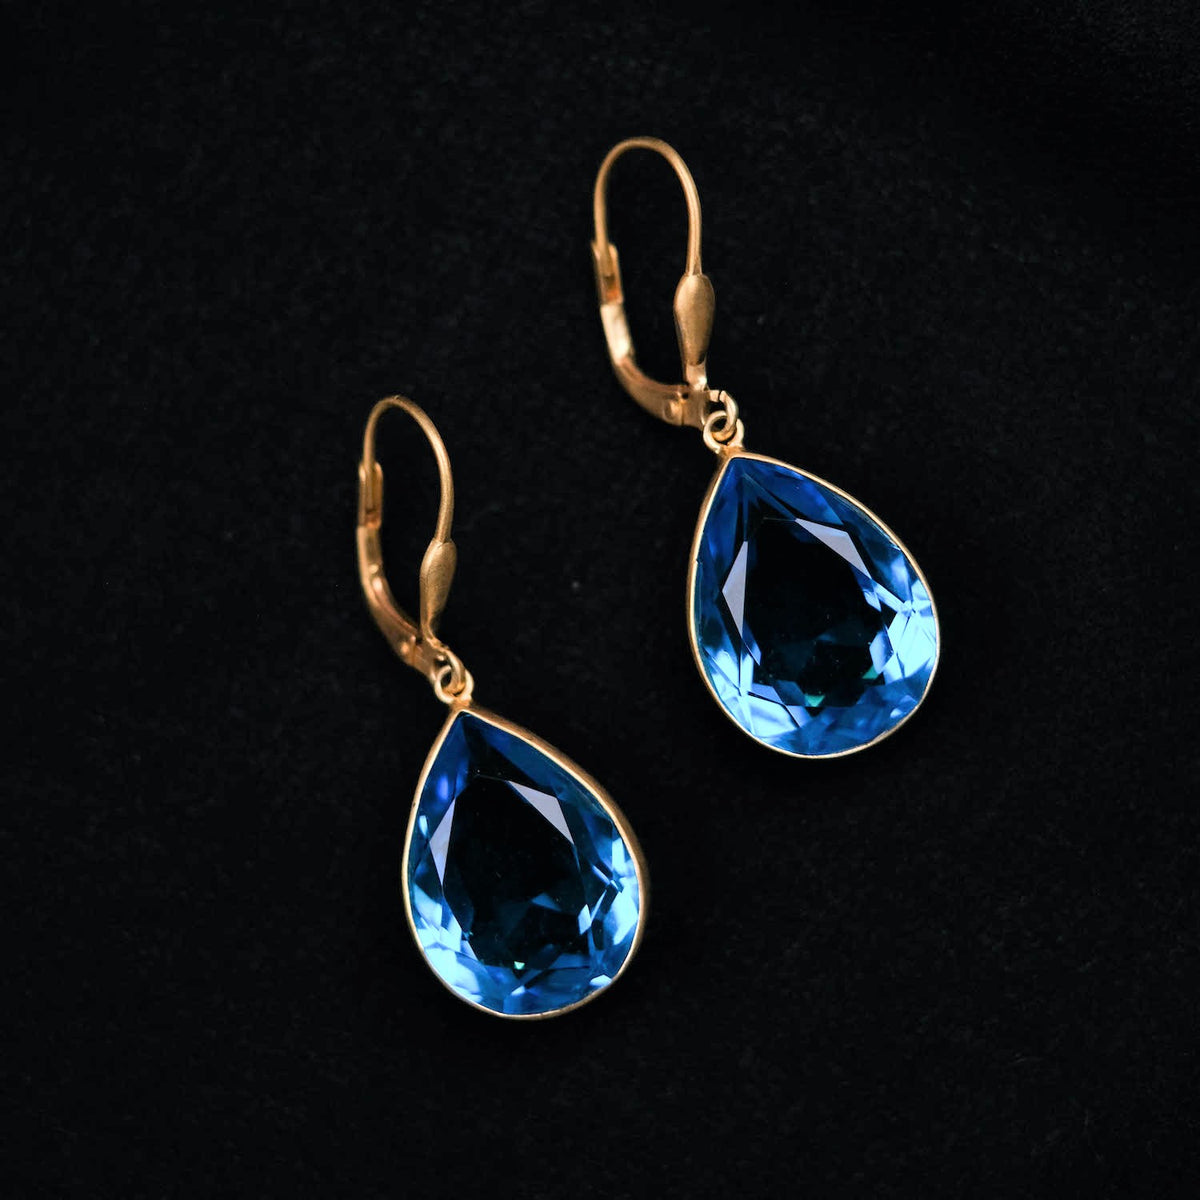 Pendientes artesanales hechos a mano en plata de ley y obsidiana azul facetada. Longitud 4´5 cm Peso 11 g. Blue earrings. Gold plated silver earrings. Lula Máiz